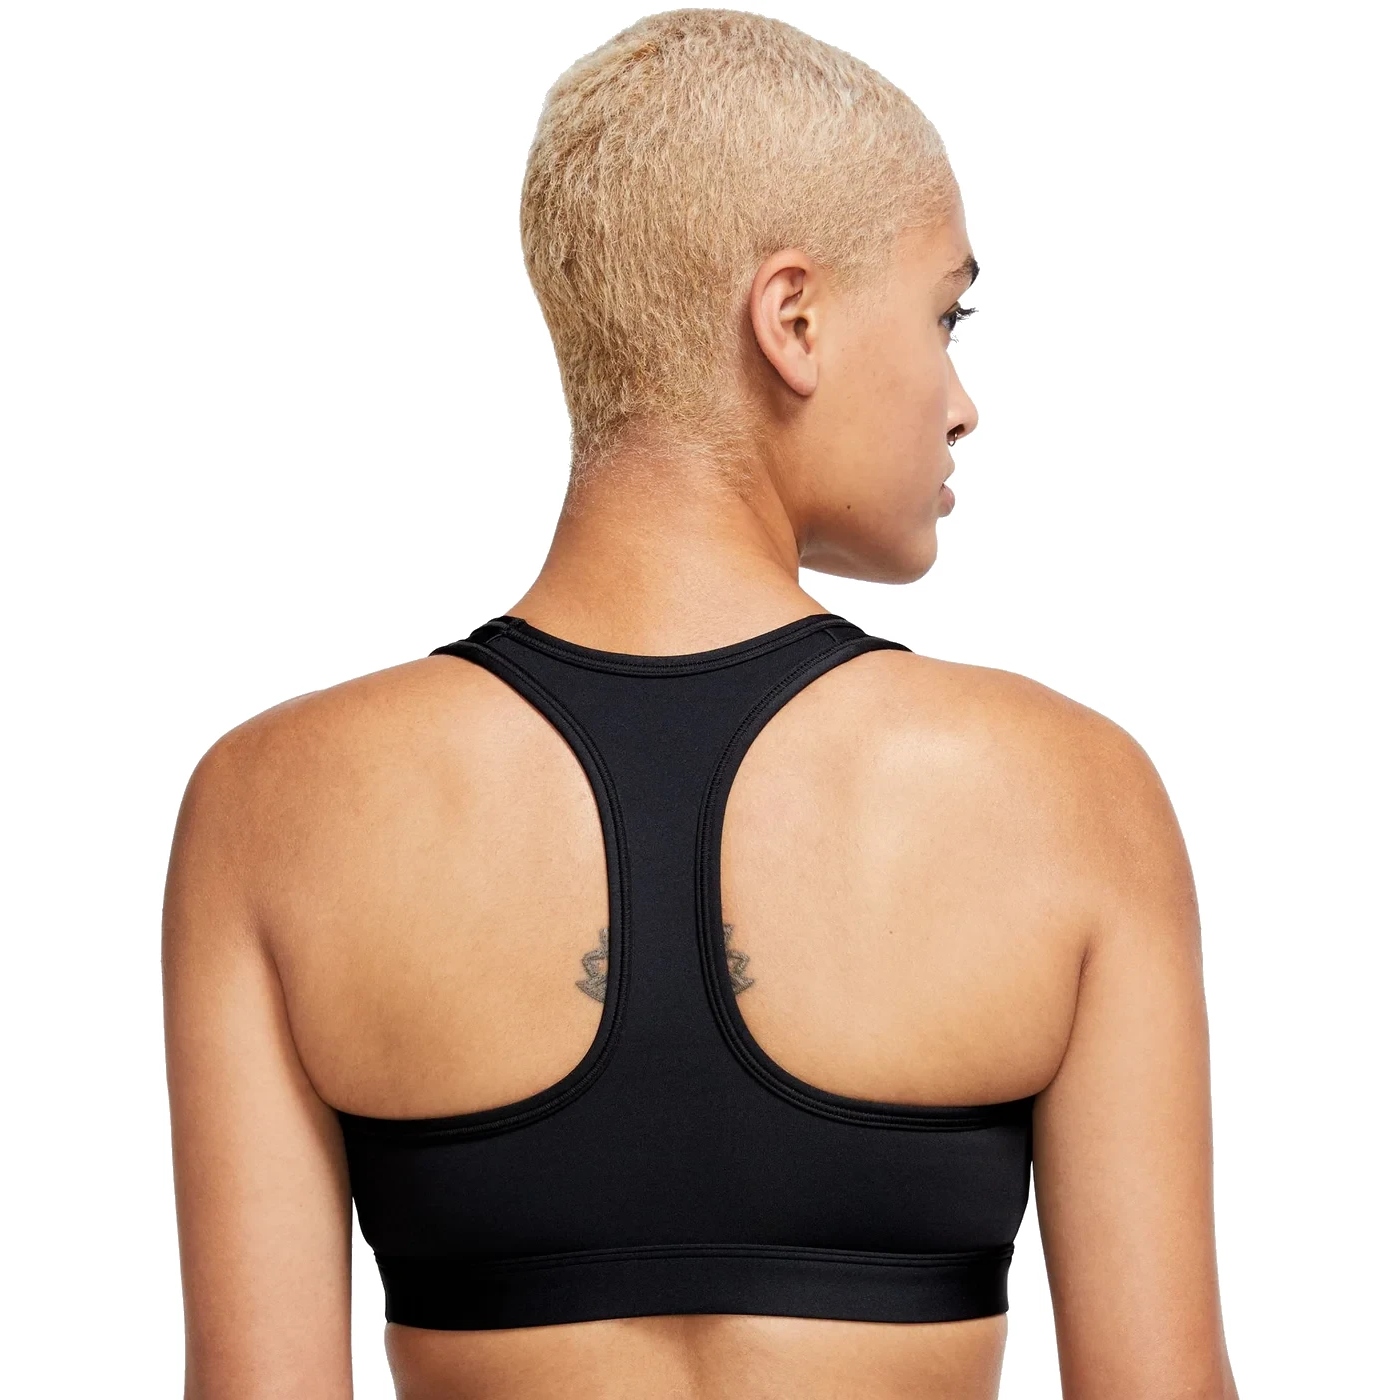 Nike Training Swoosh Futura graphic medium support sports bra in